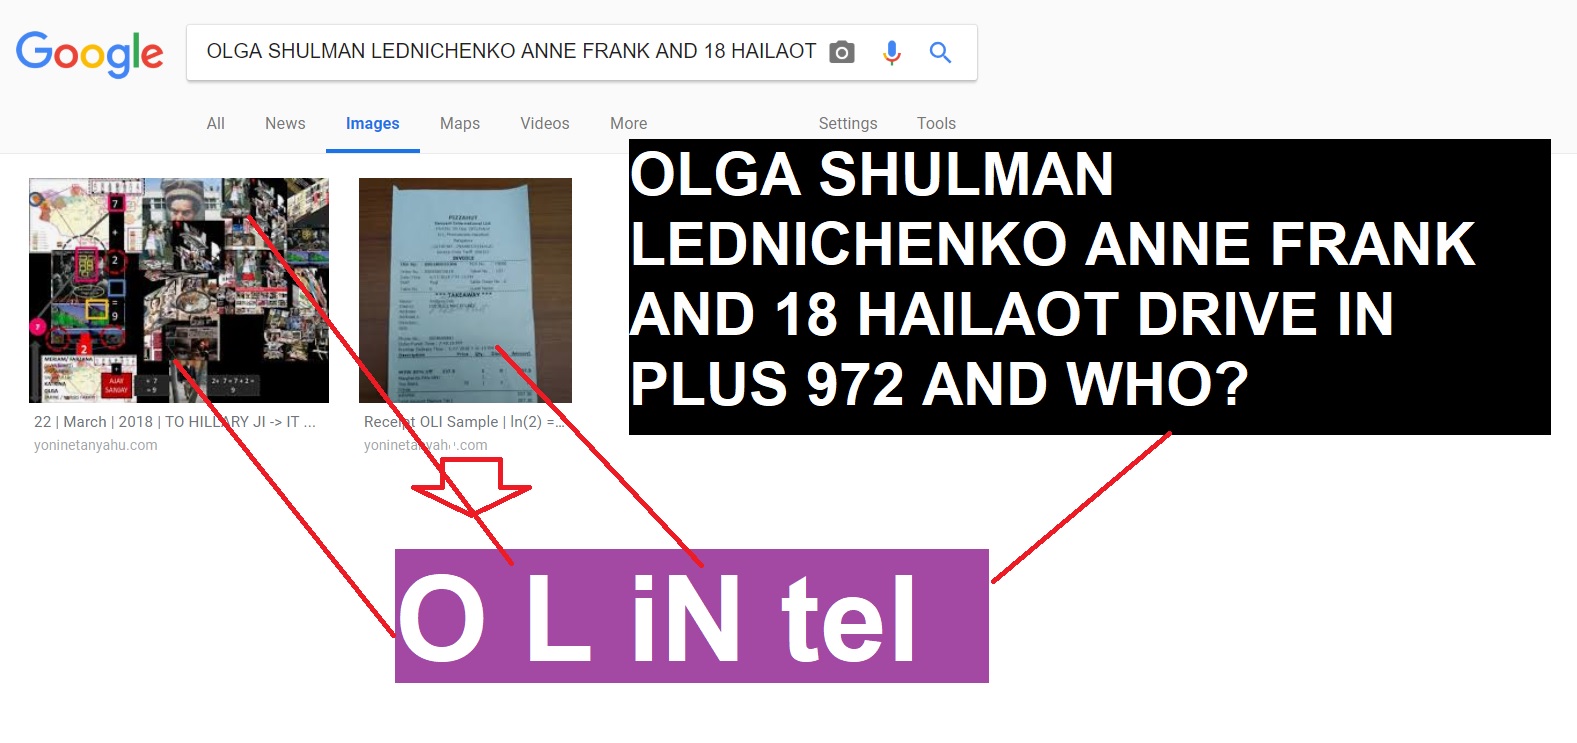 olga shulman lednichenko anne frank and 18 hailaot drive in plus 972 and who - p oli 7